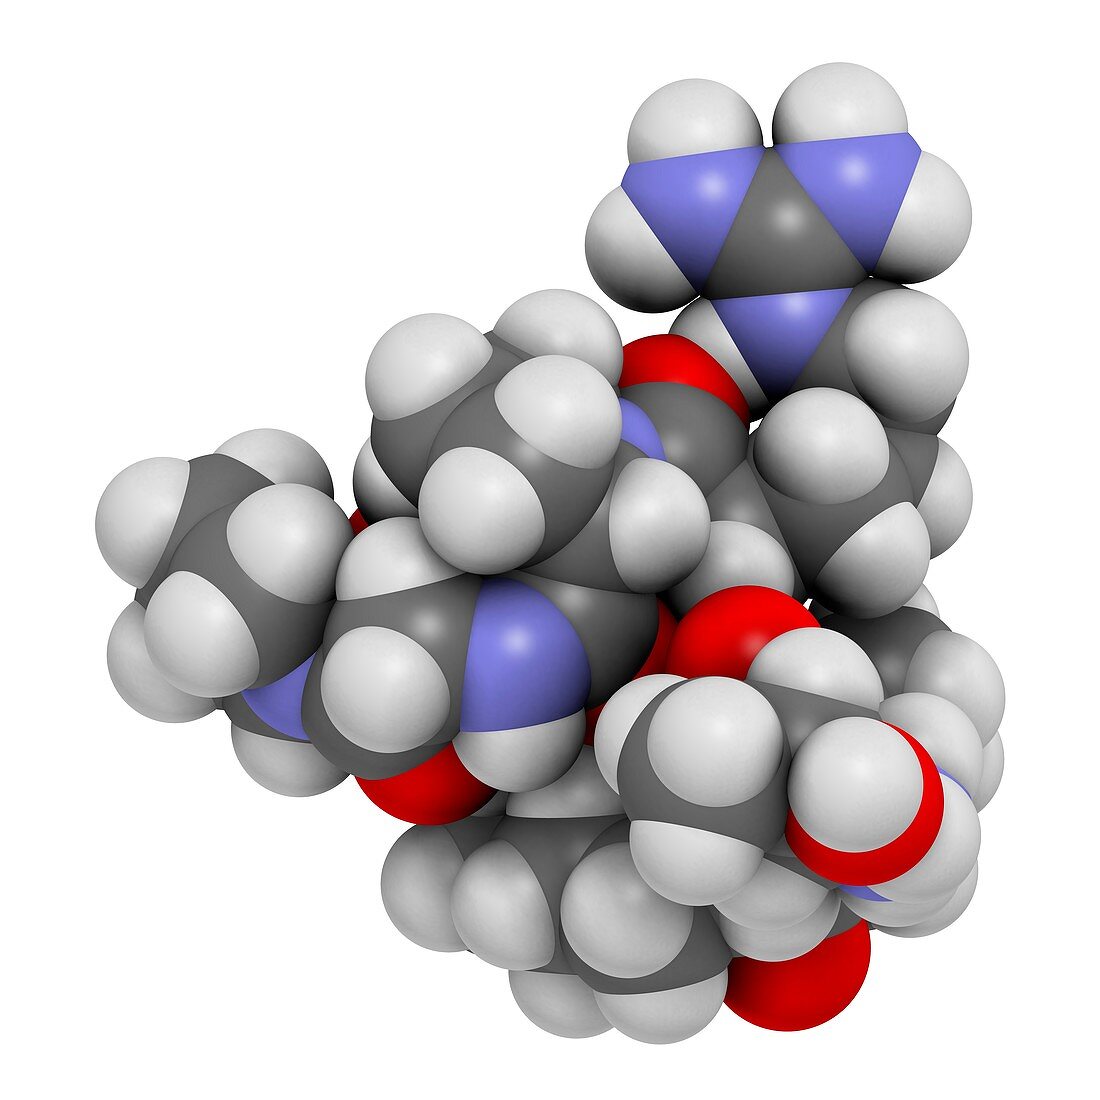 Selank nootropic and anxiolytic peptide molecule